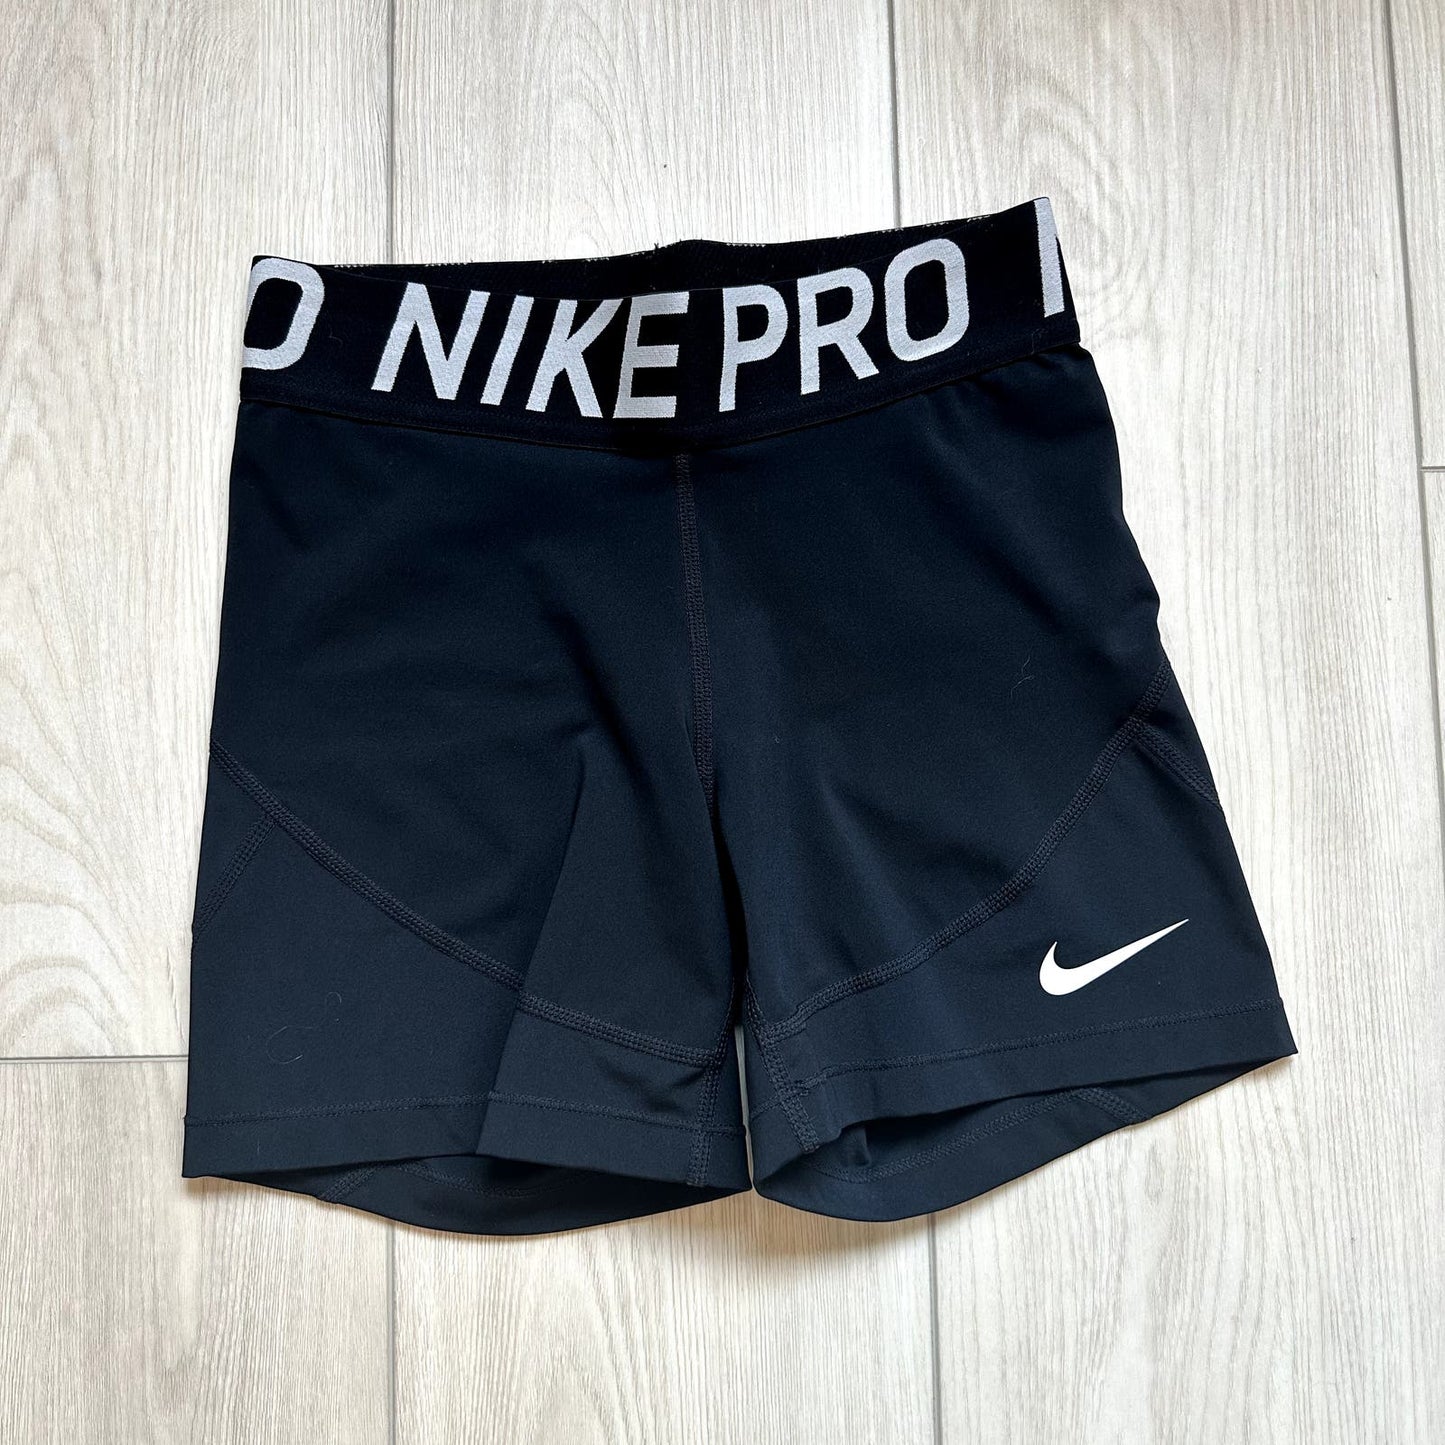 Nike Pro Dri-Fit black compression athletic gym shorts